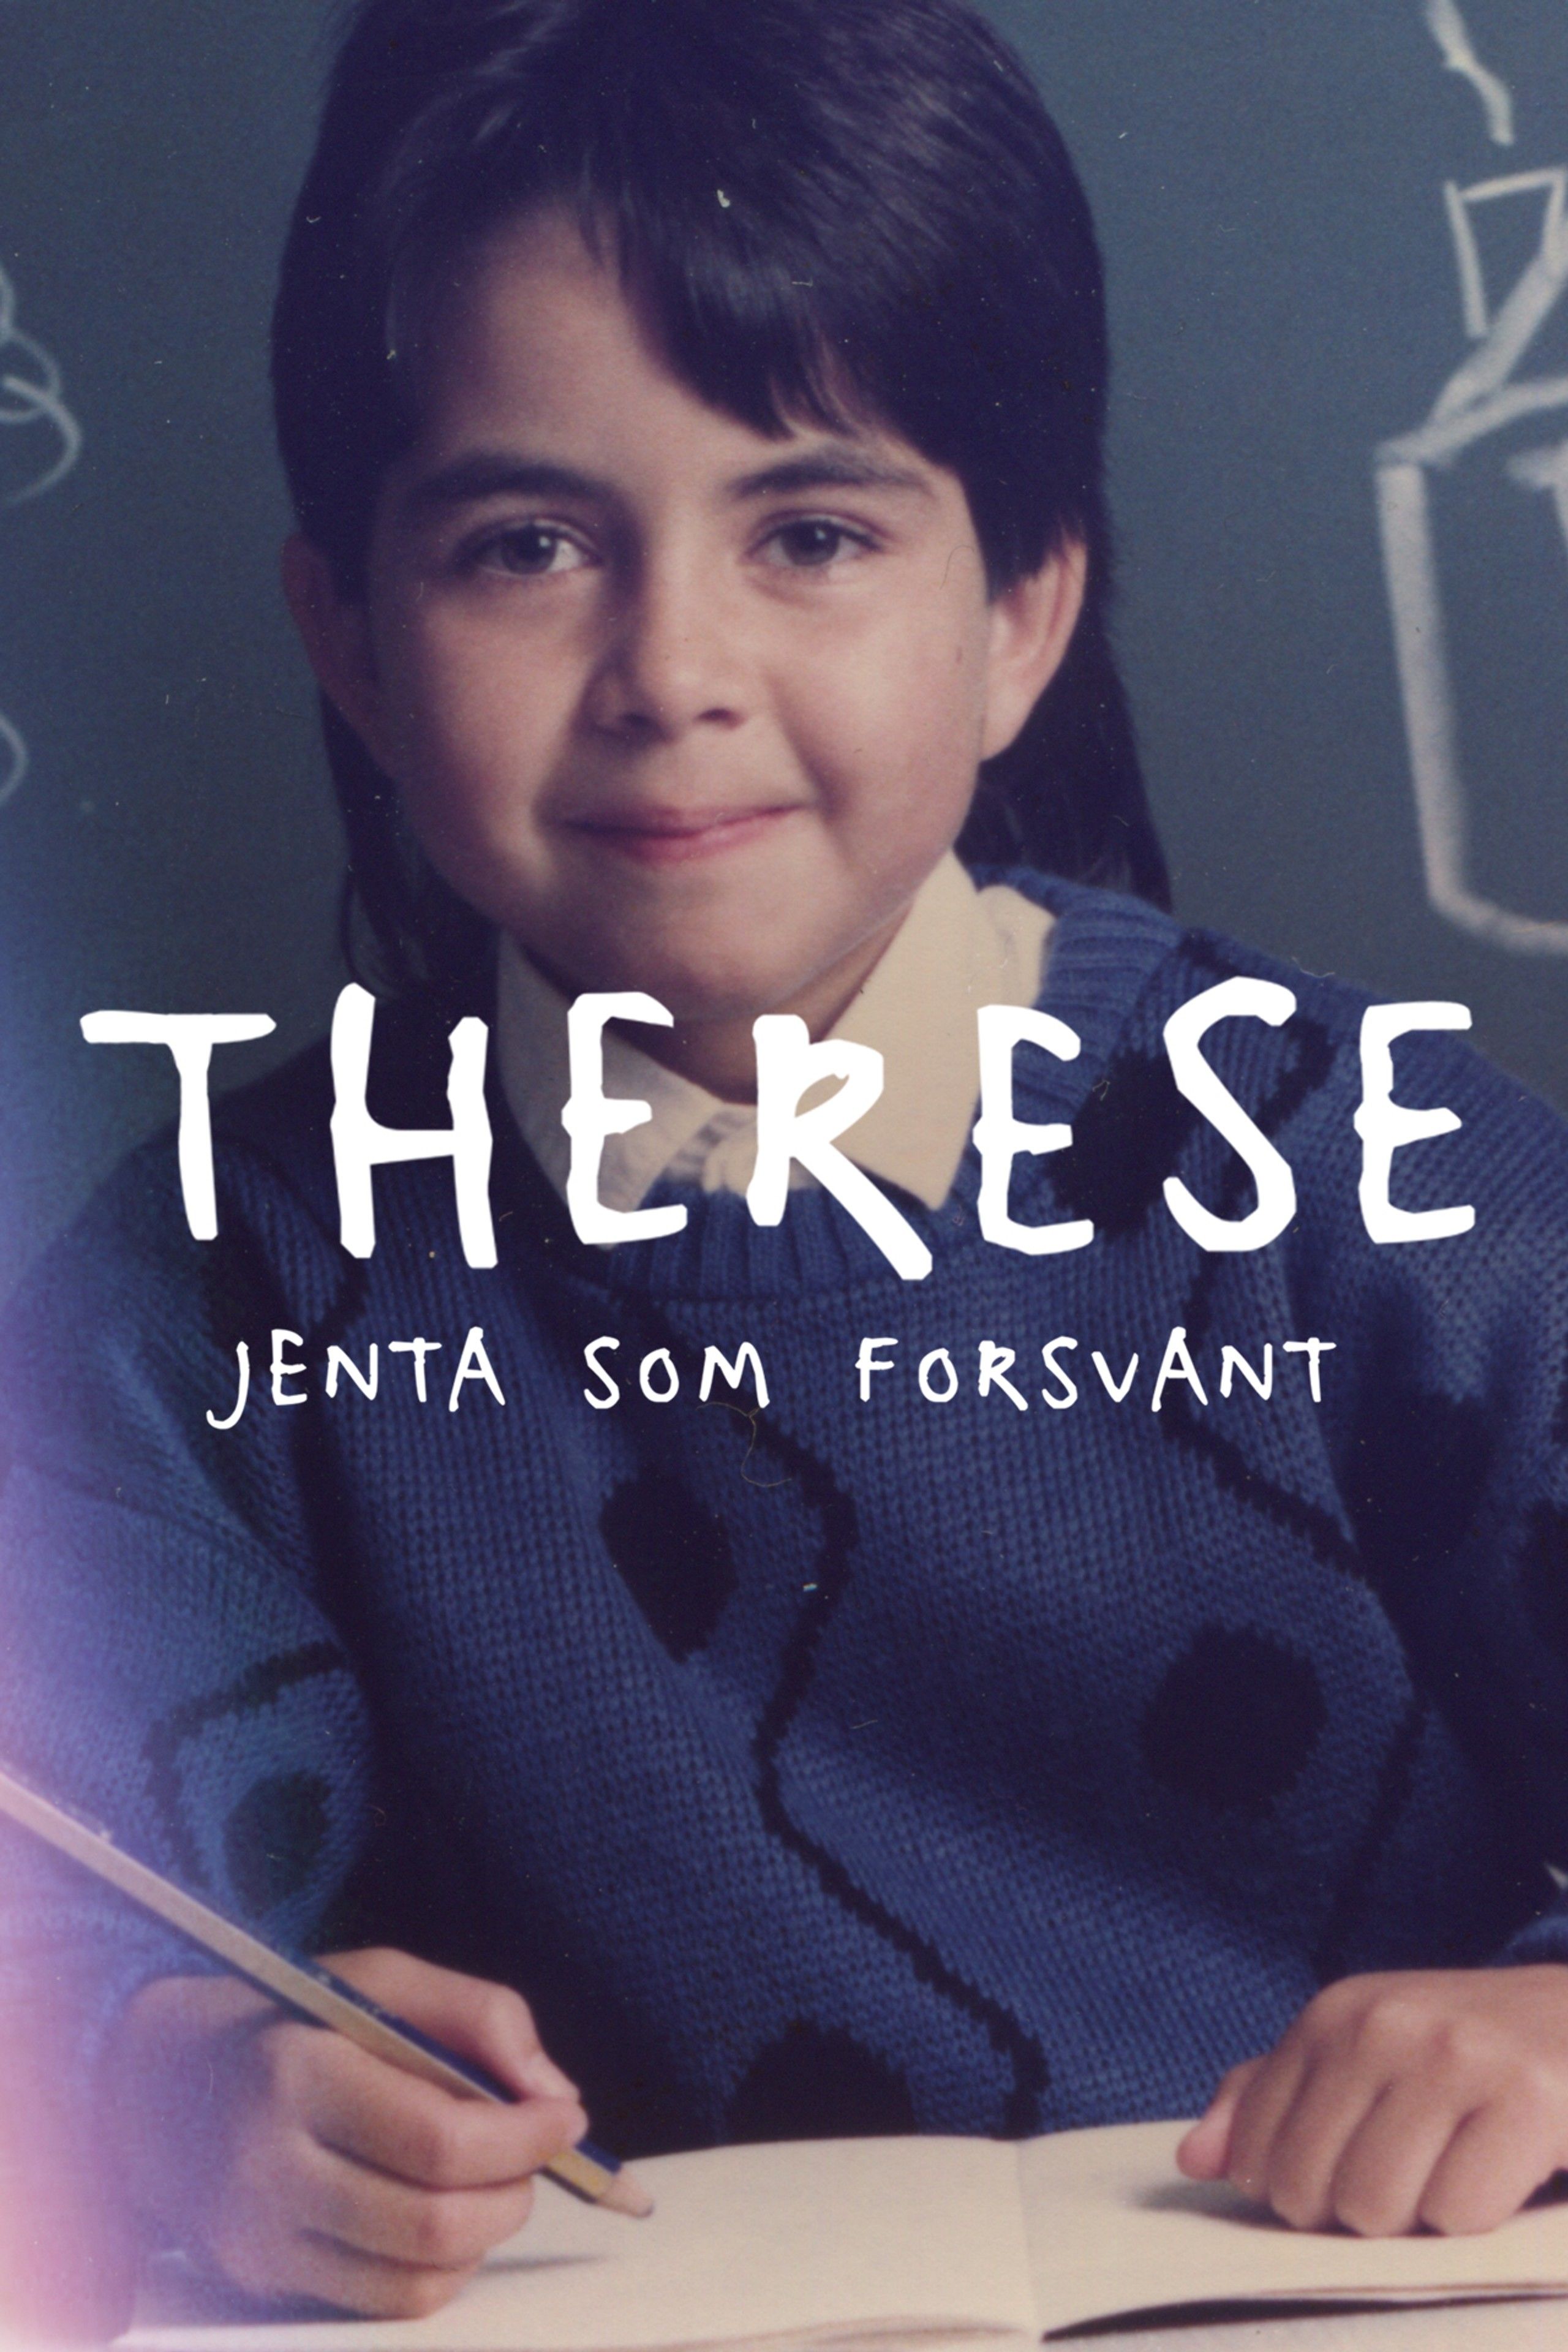 Therese - jenta som forsvant ne zaman